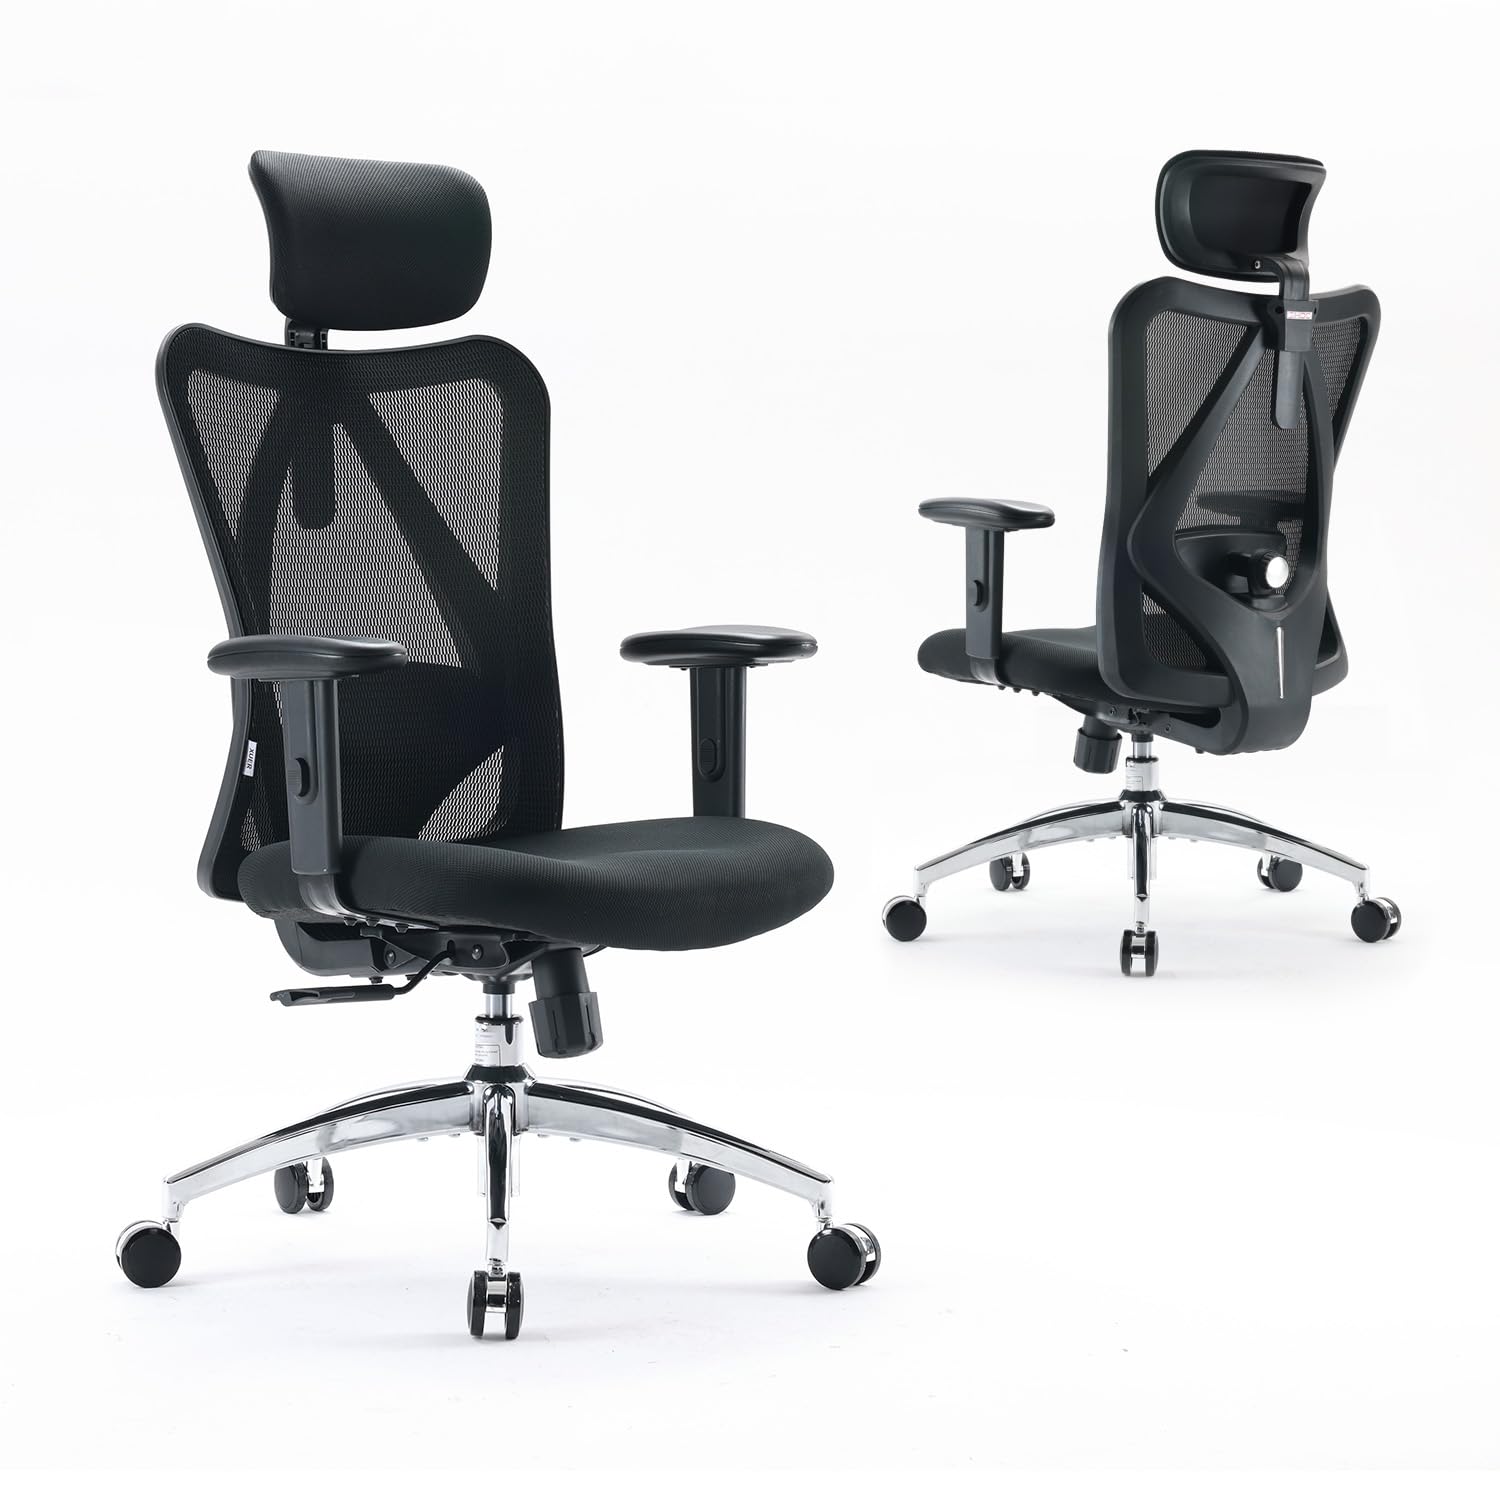 SIHOO® M18 High Back Office Chair